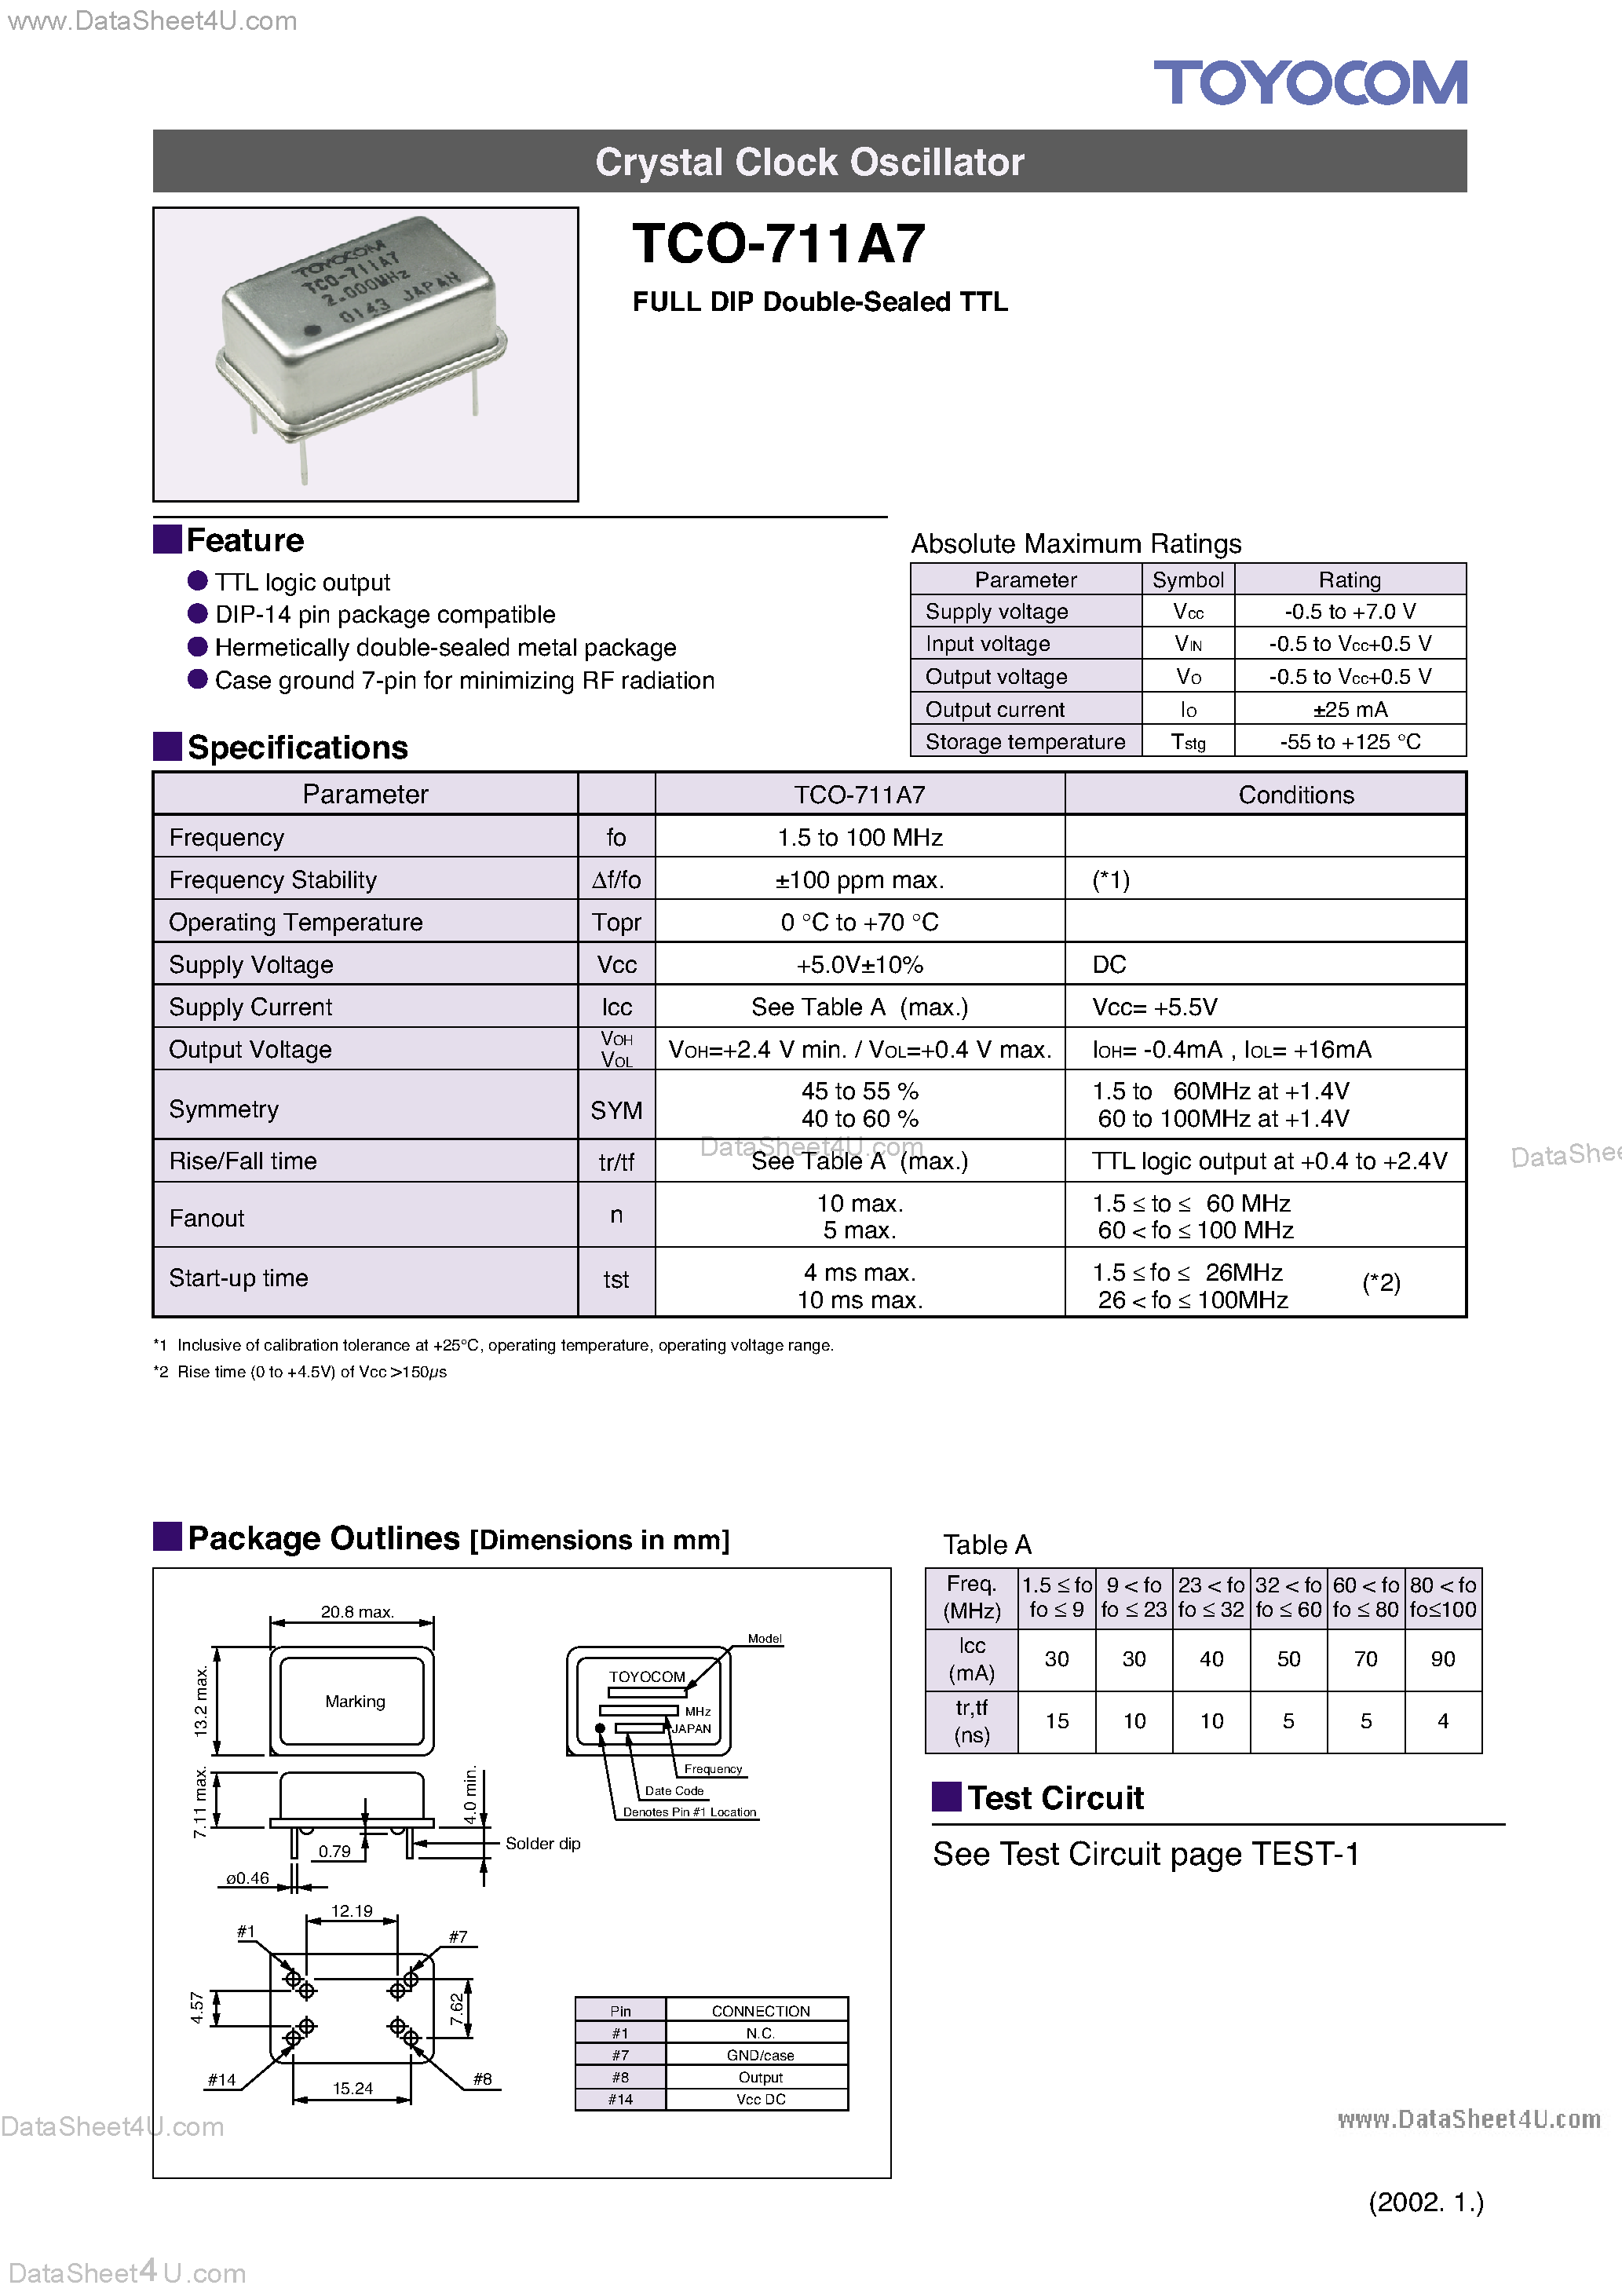 Даташит TCO-711A7 - Full DIP Double Sealed TTL Crystal Clock Oscillator страница 1